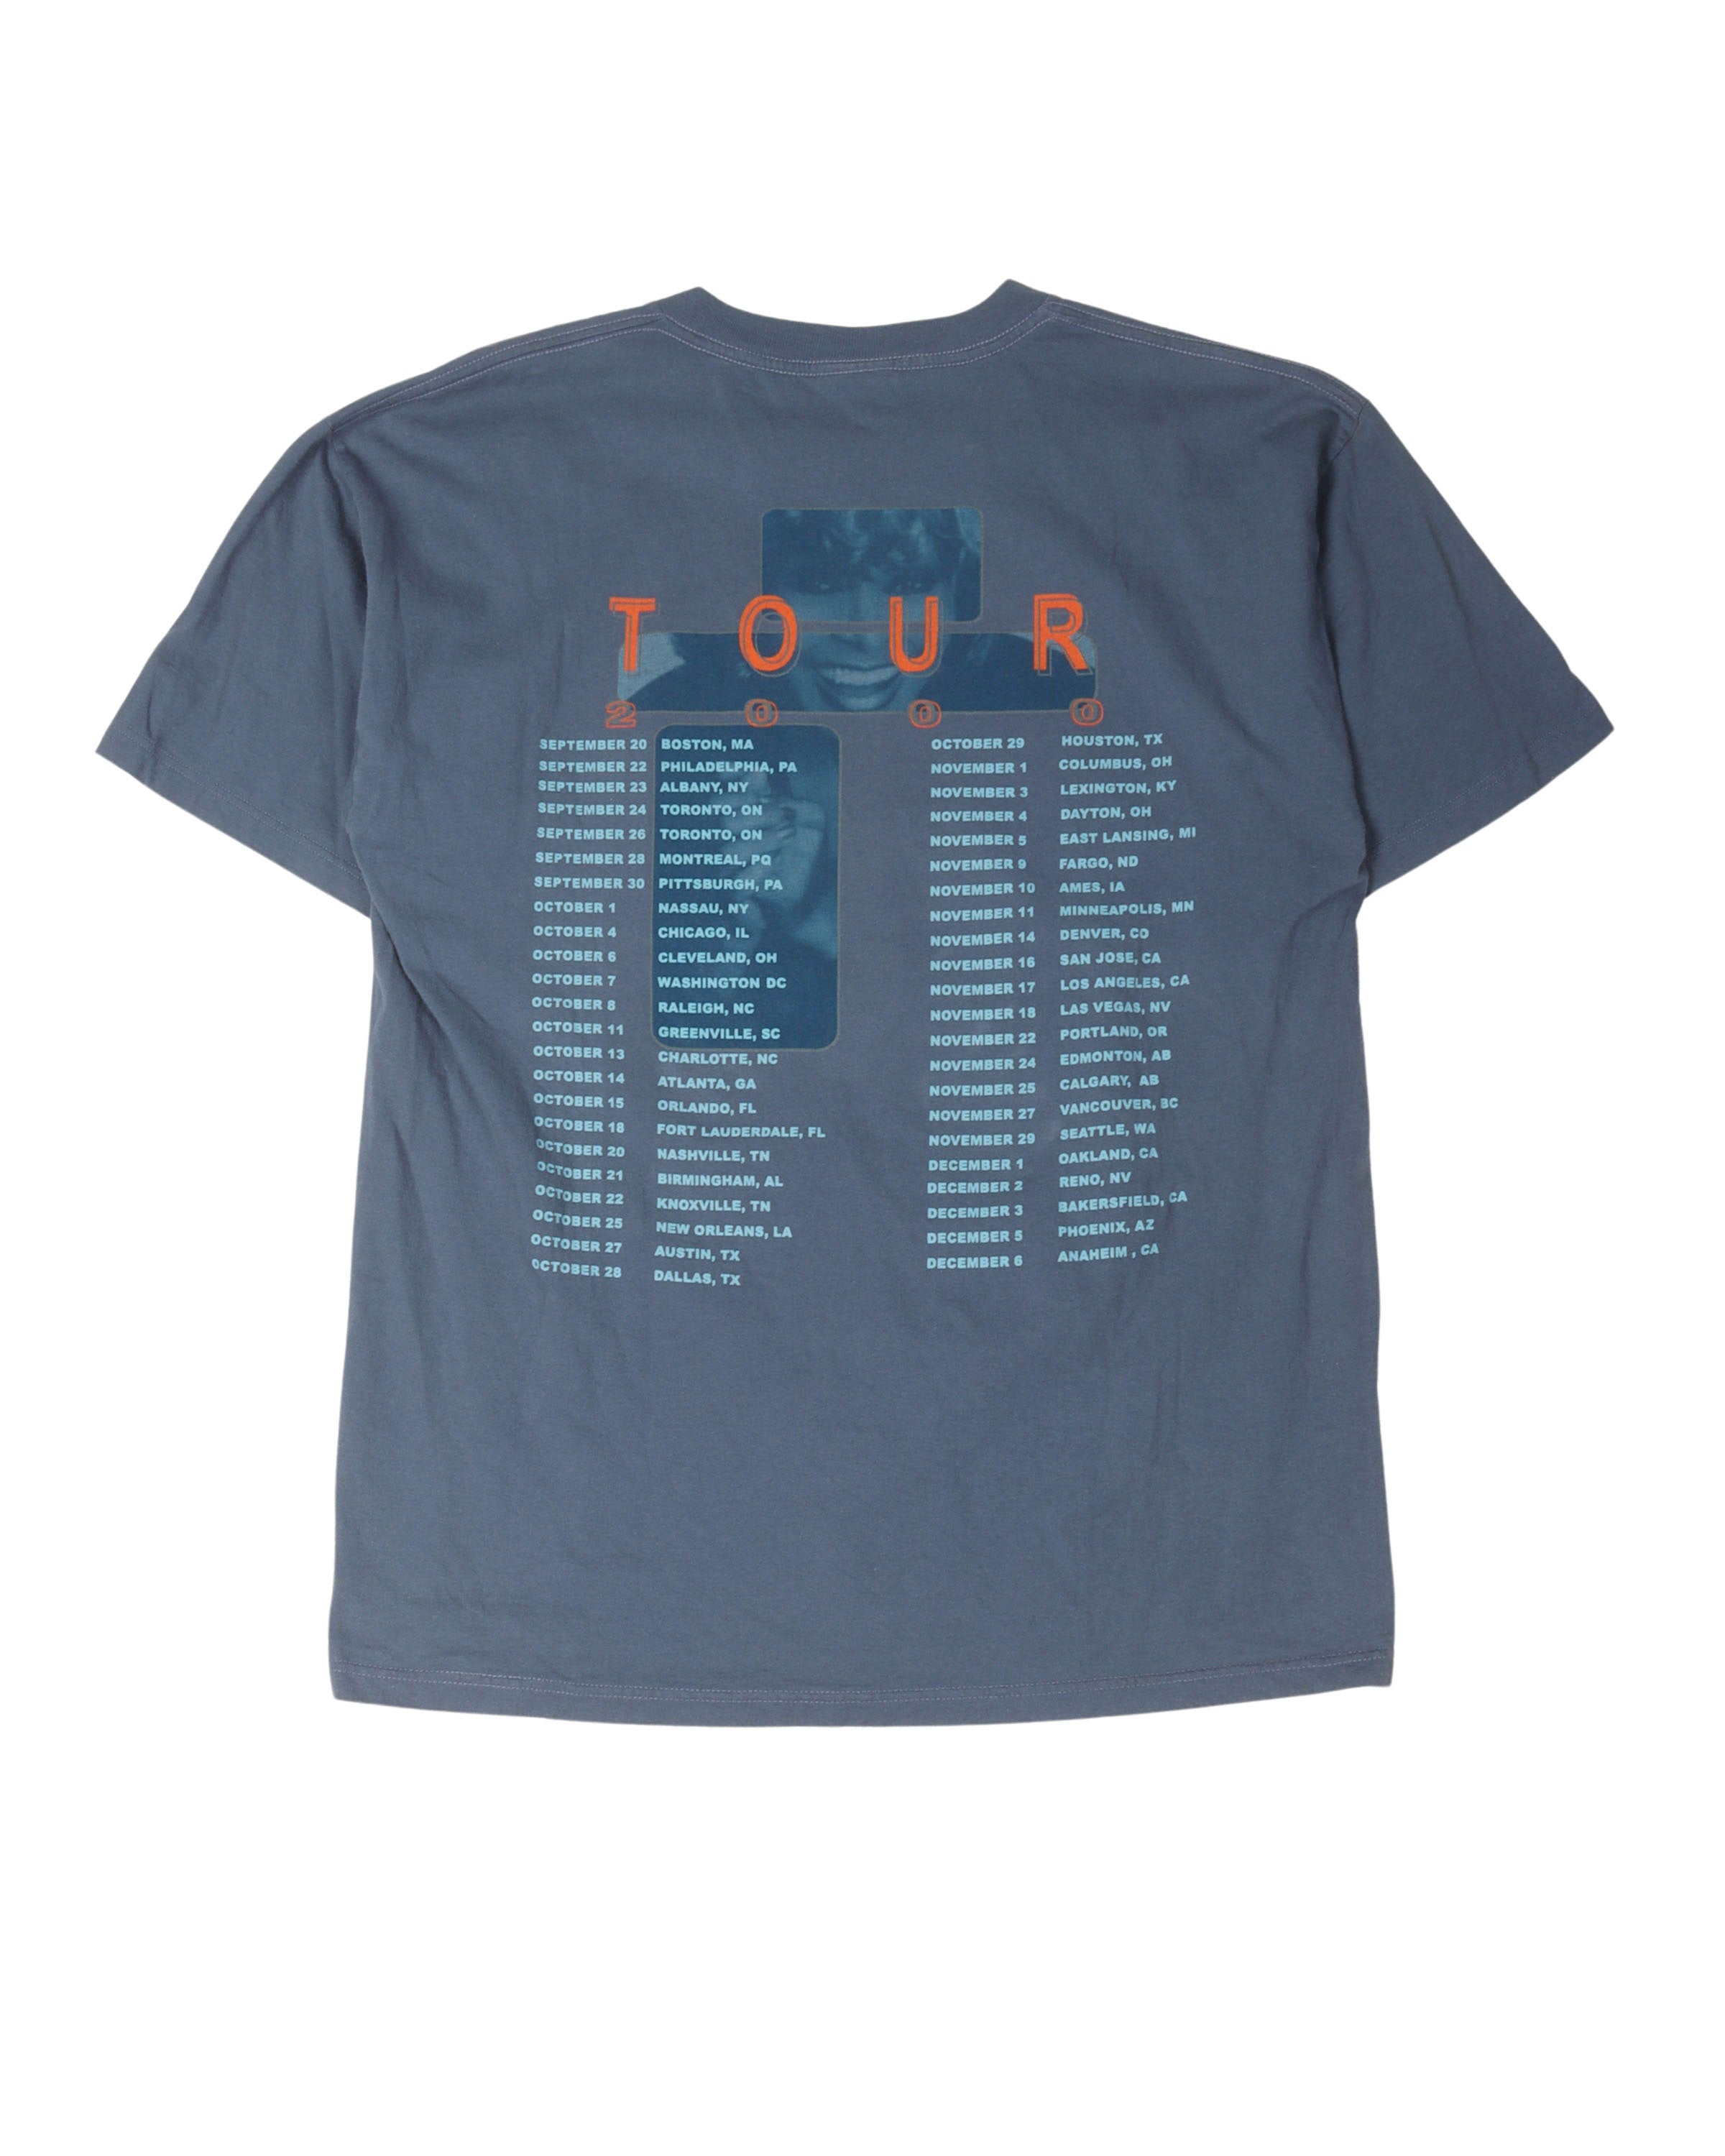 Tina Turner "Twenty Four Seven" Tour 2000 T-Shirt